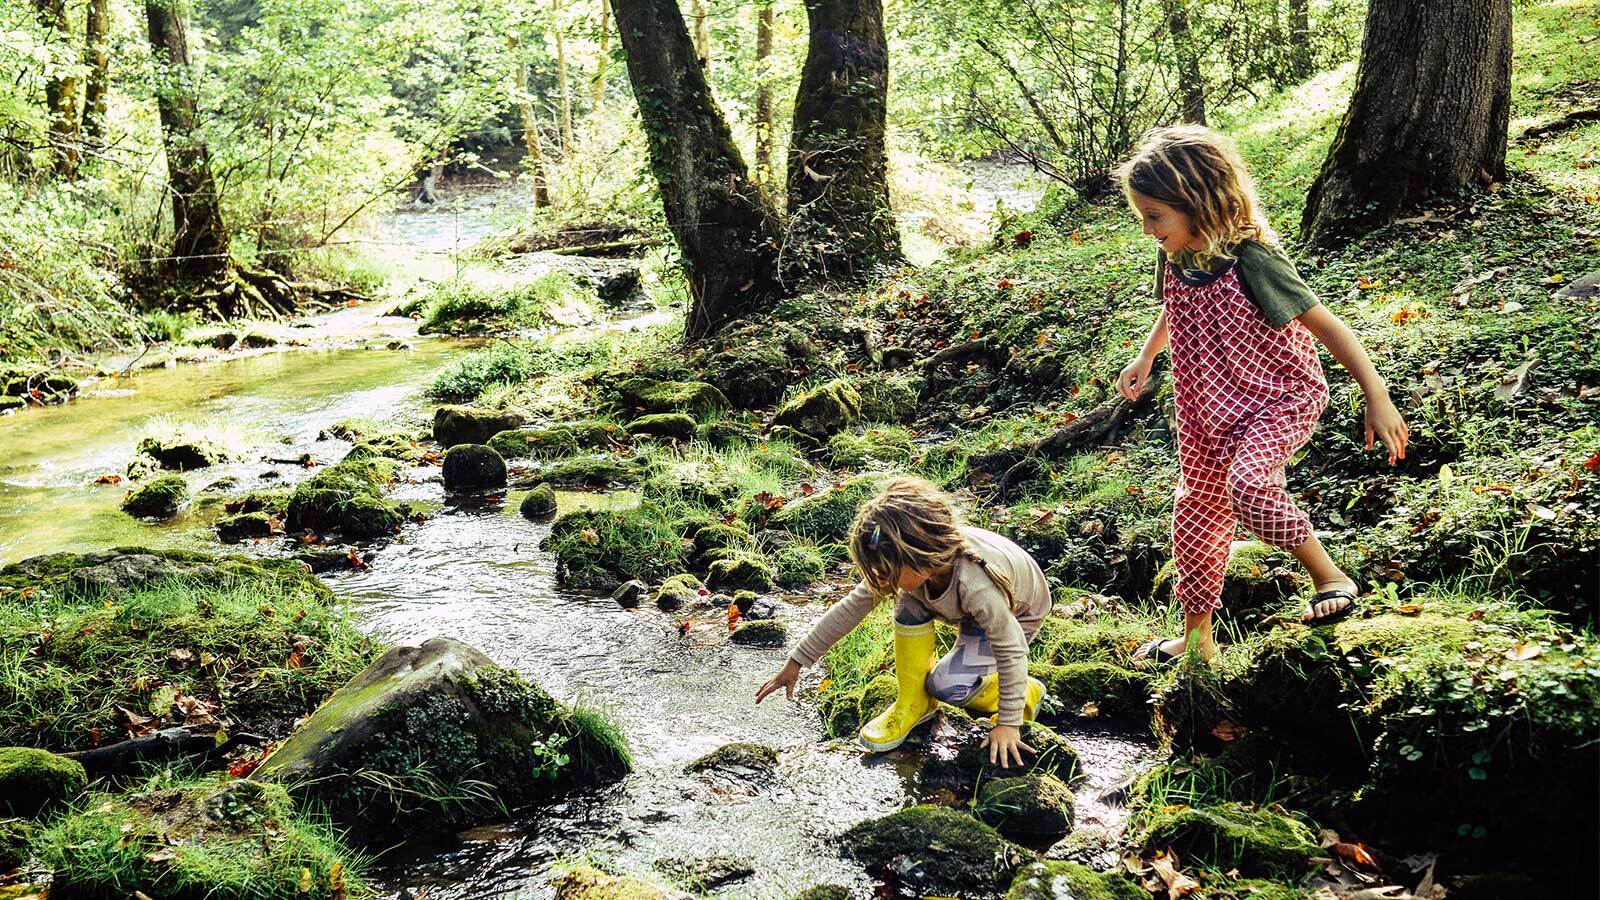 Little girl dipping hand in running stream as sister looks on.